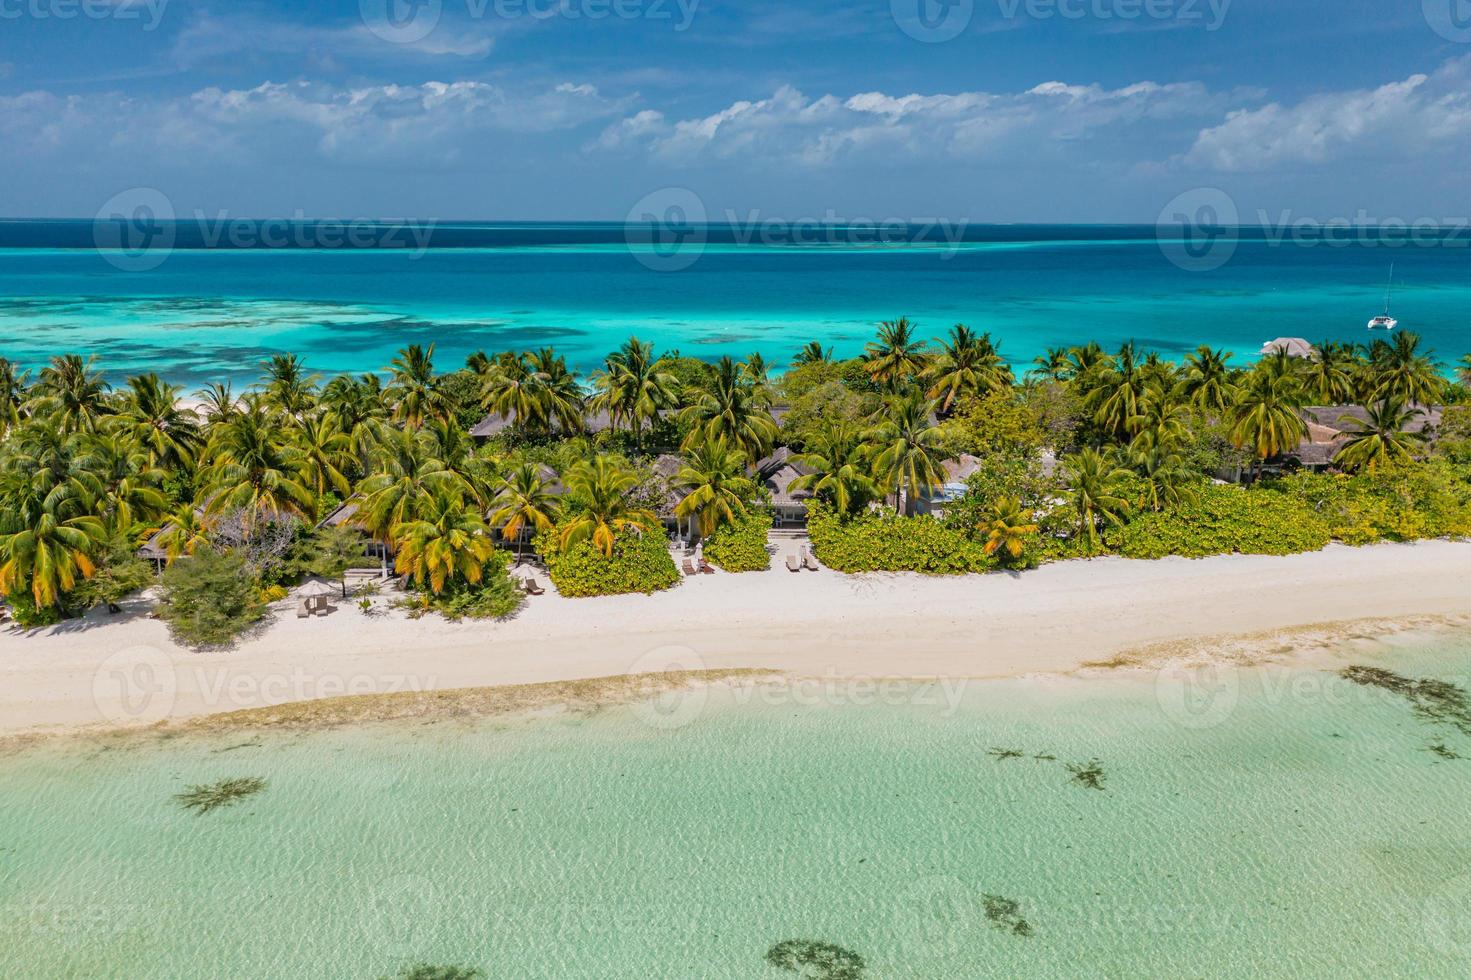 luxe villa's met kokosnoot palm bomen, blauw lagune, wit zanderig strand Bij Maldiven eilanden. mooi zomer vakantie, vakantie landschap. verbazingwekkend ontspannende natuur antenne tafereel, op reis achtergrond foto